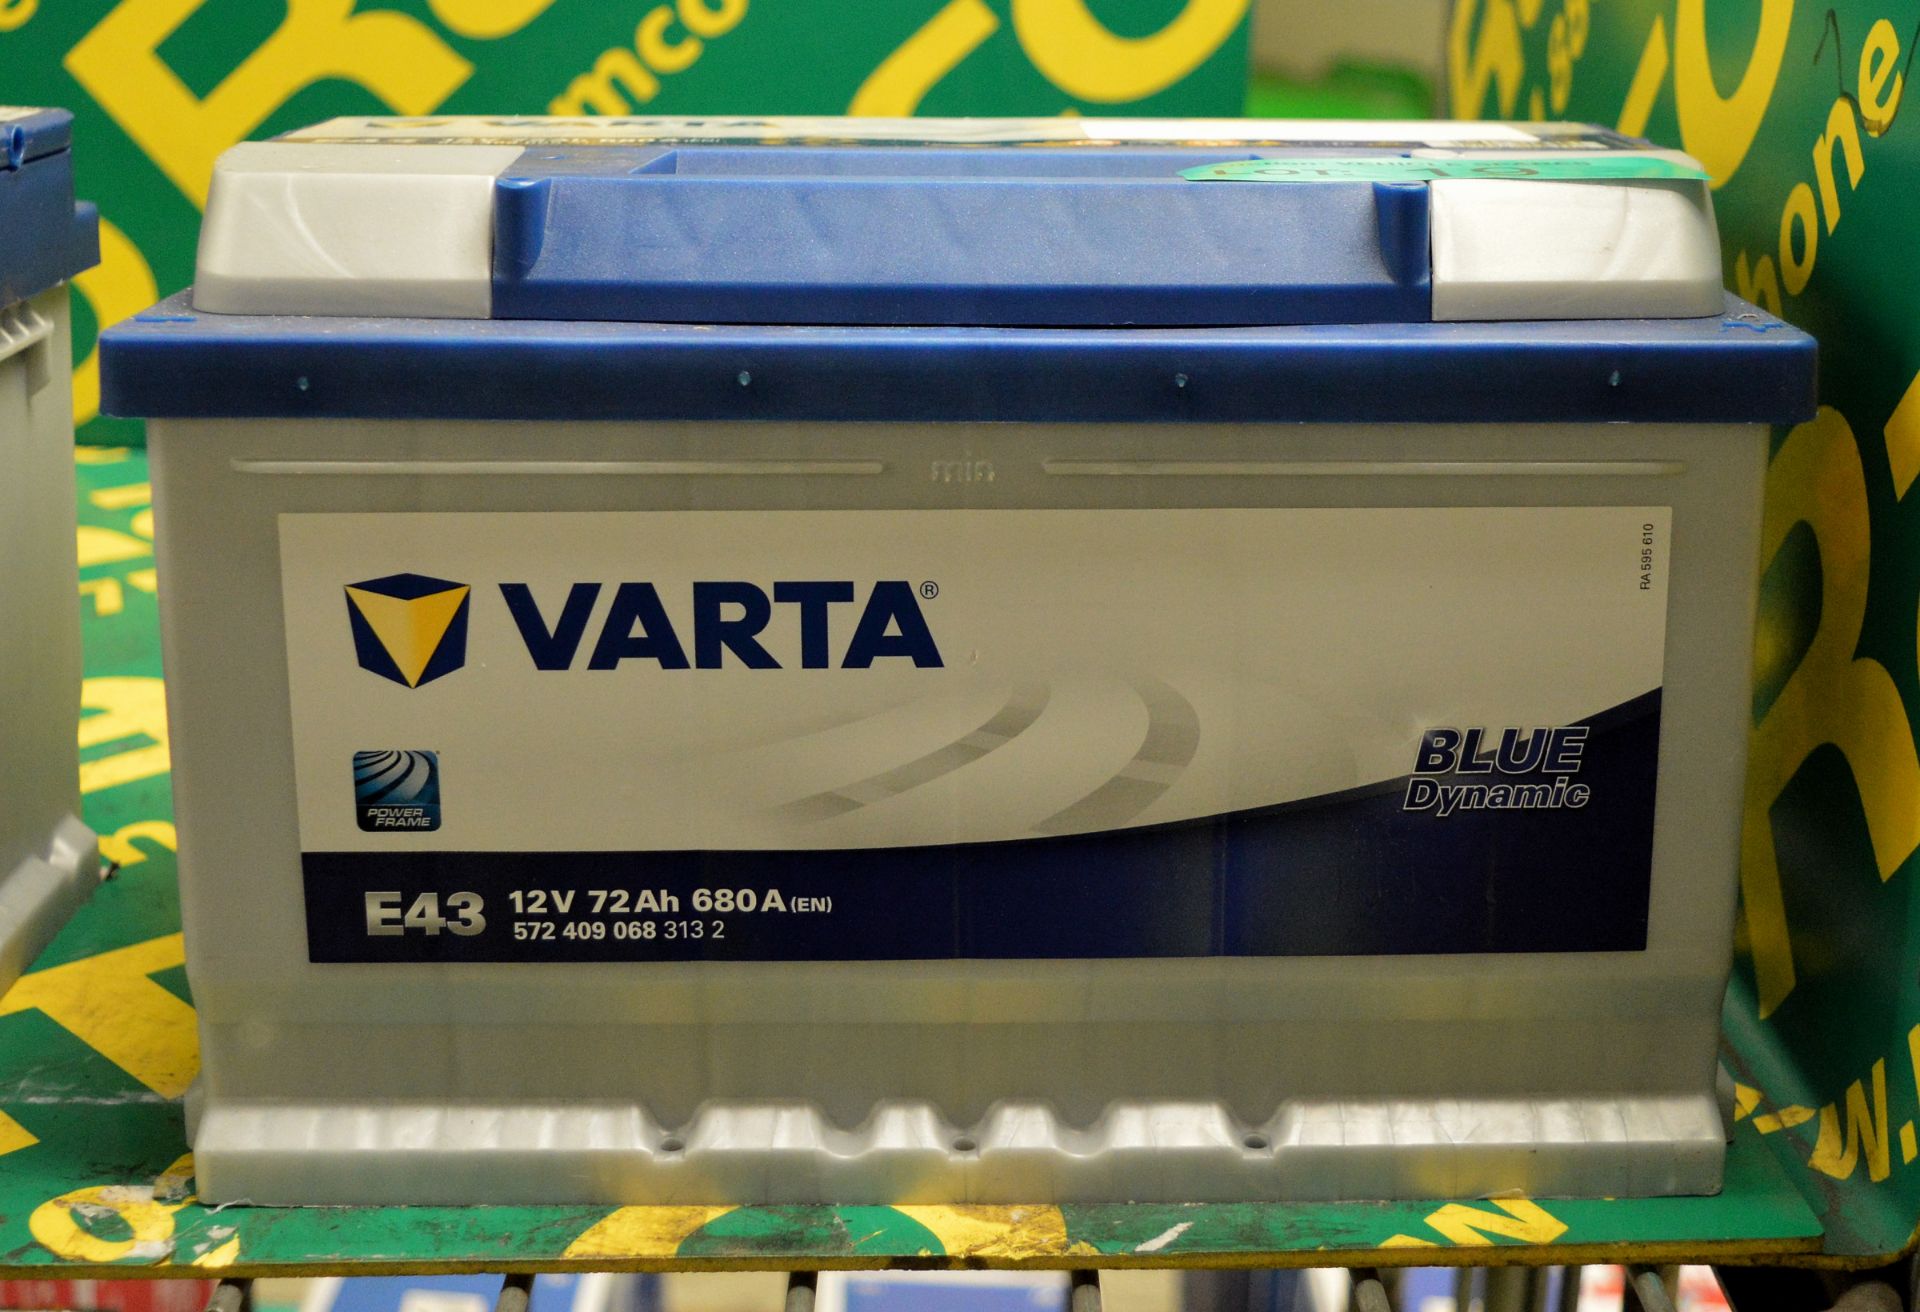 Varta Blue Dynamic E43 12V 72Ah 680A Battery